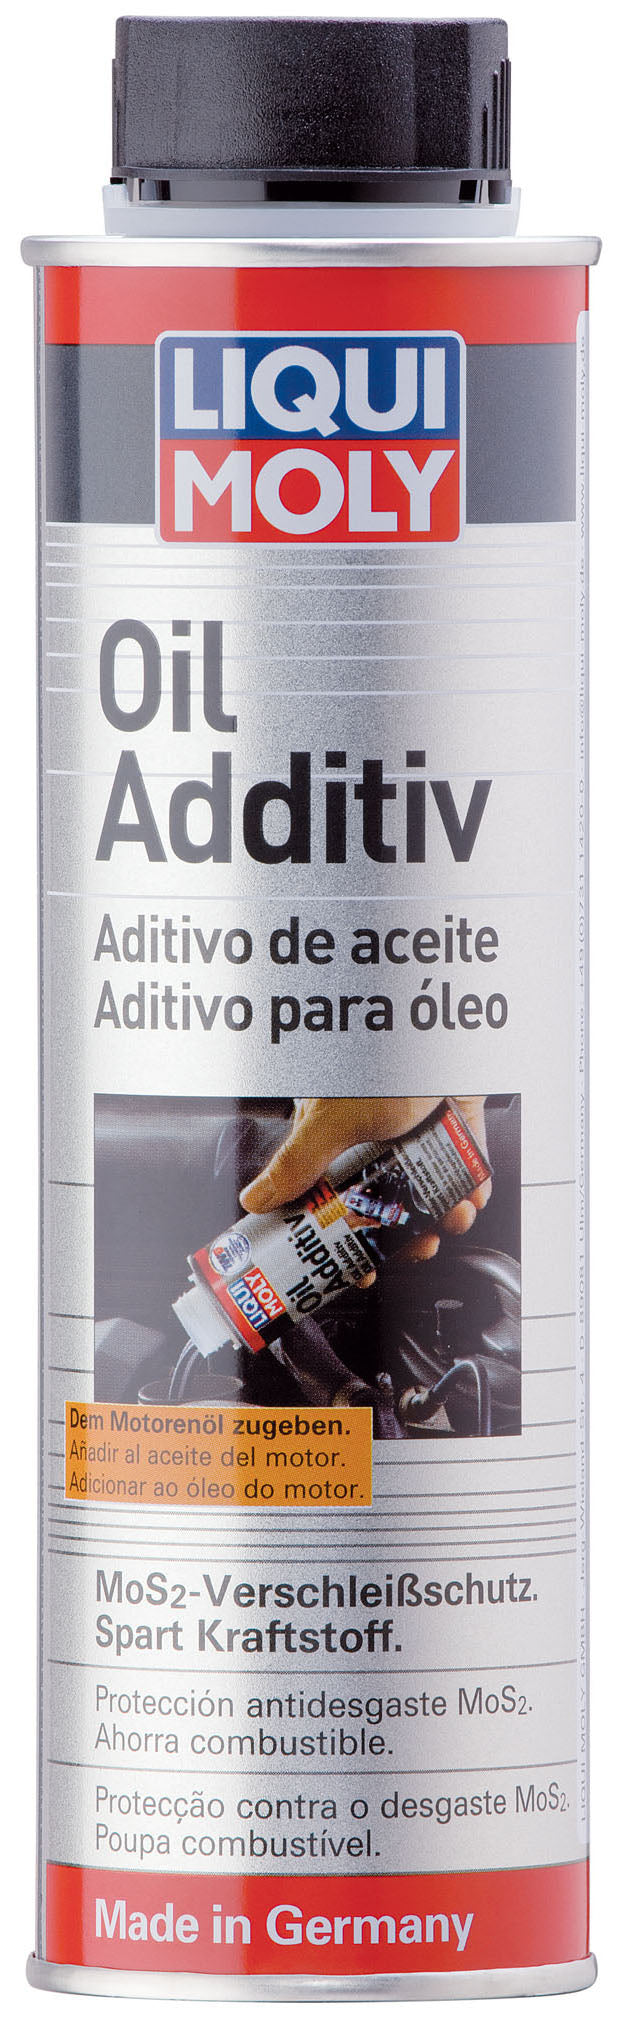 Oil Additiv - MoS2